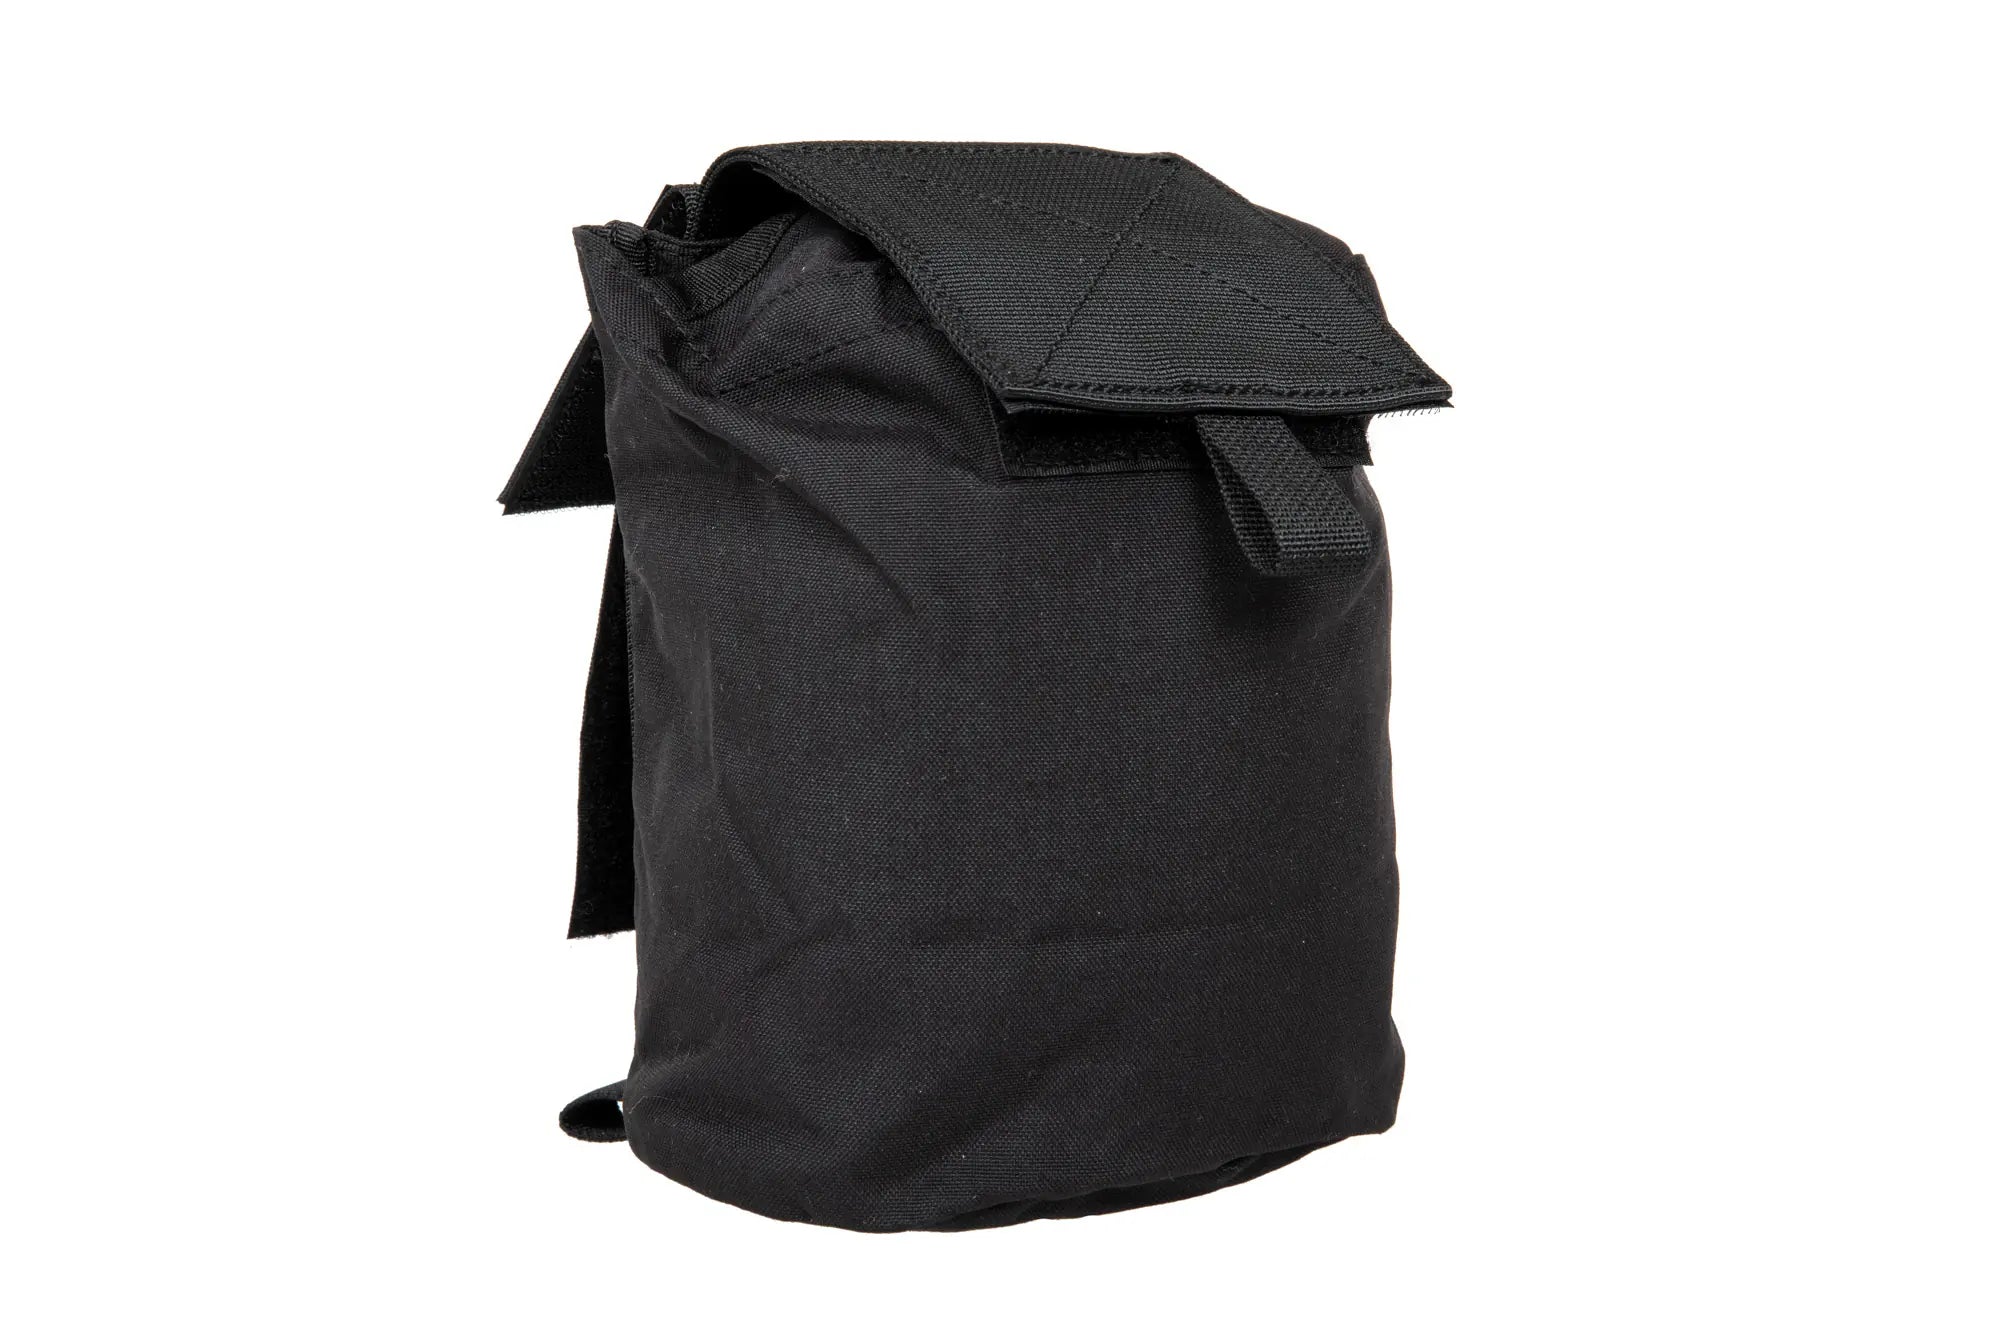 Tactical storage bag - Black-2